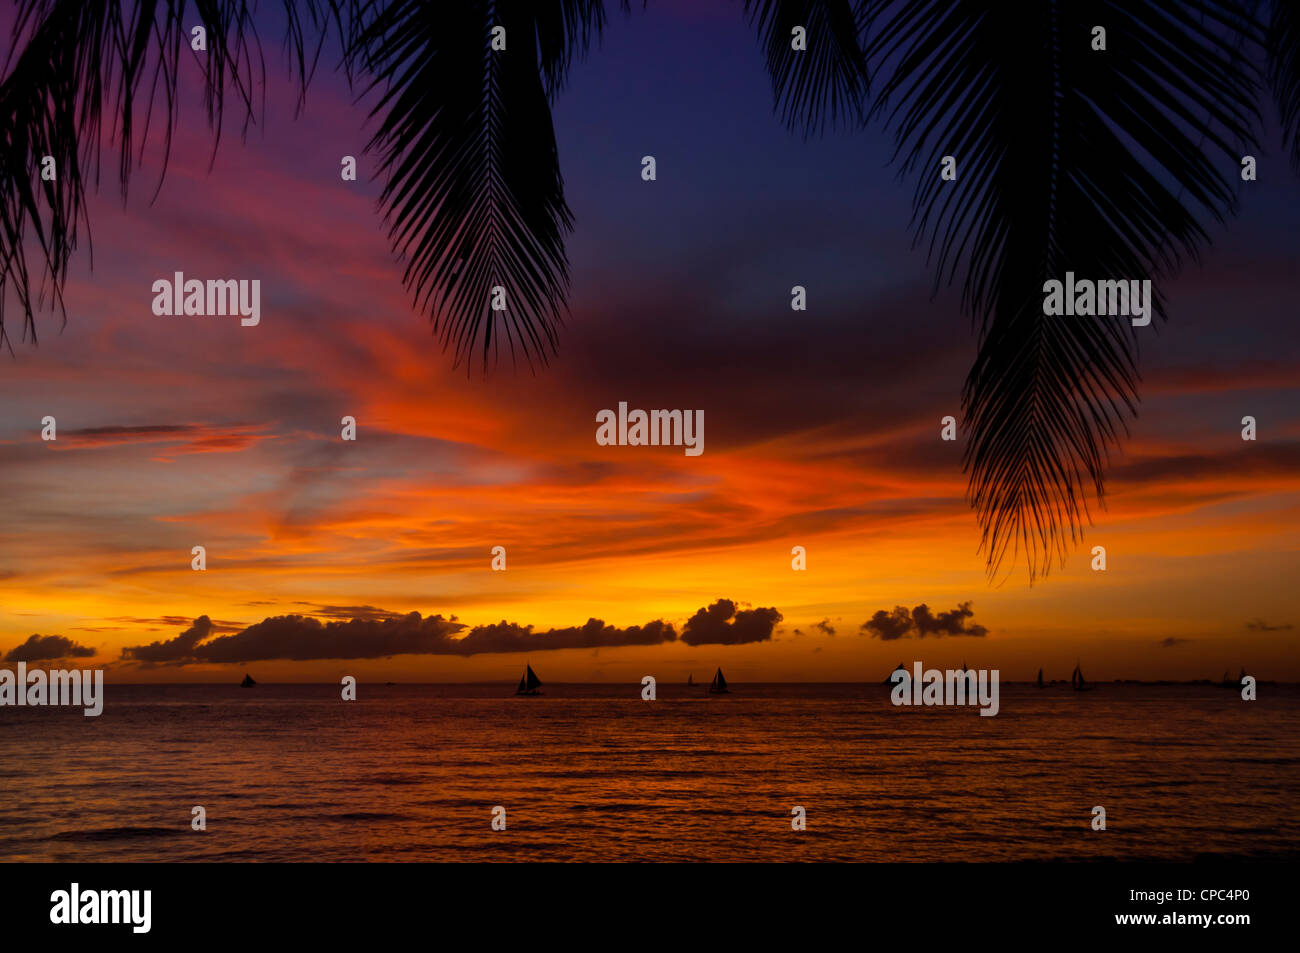 Bellissimo tramonto tropicale con Palm tree silhouette Foto Stock